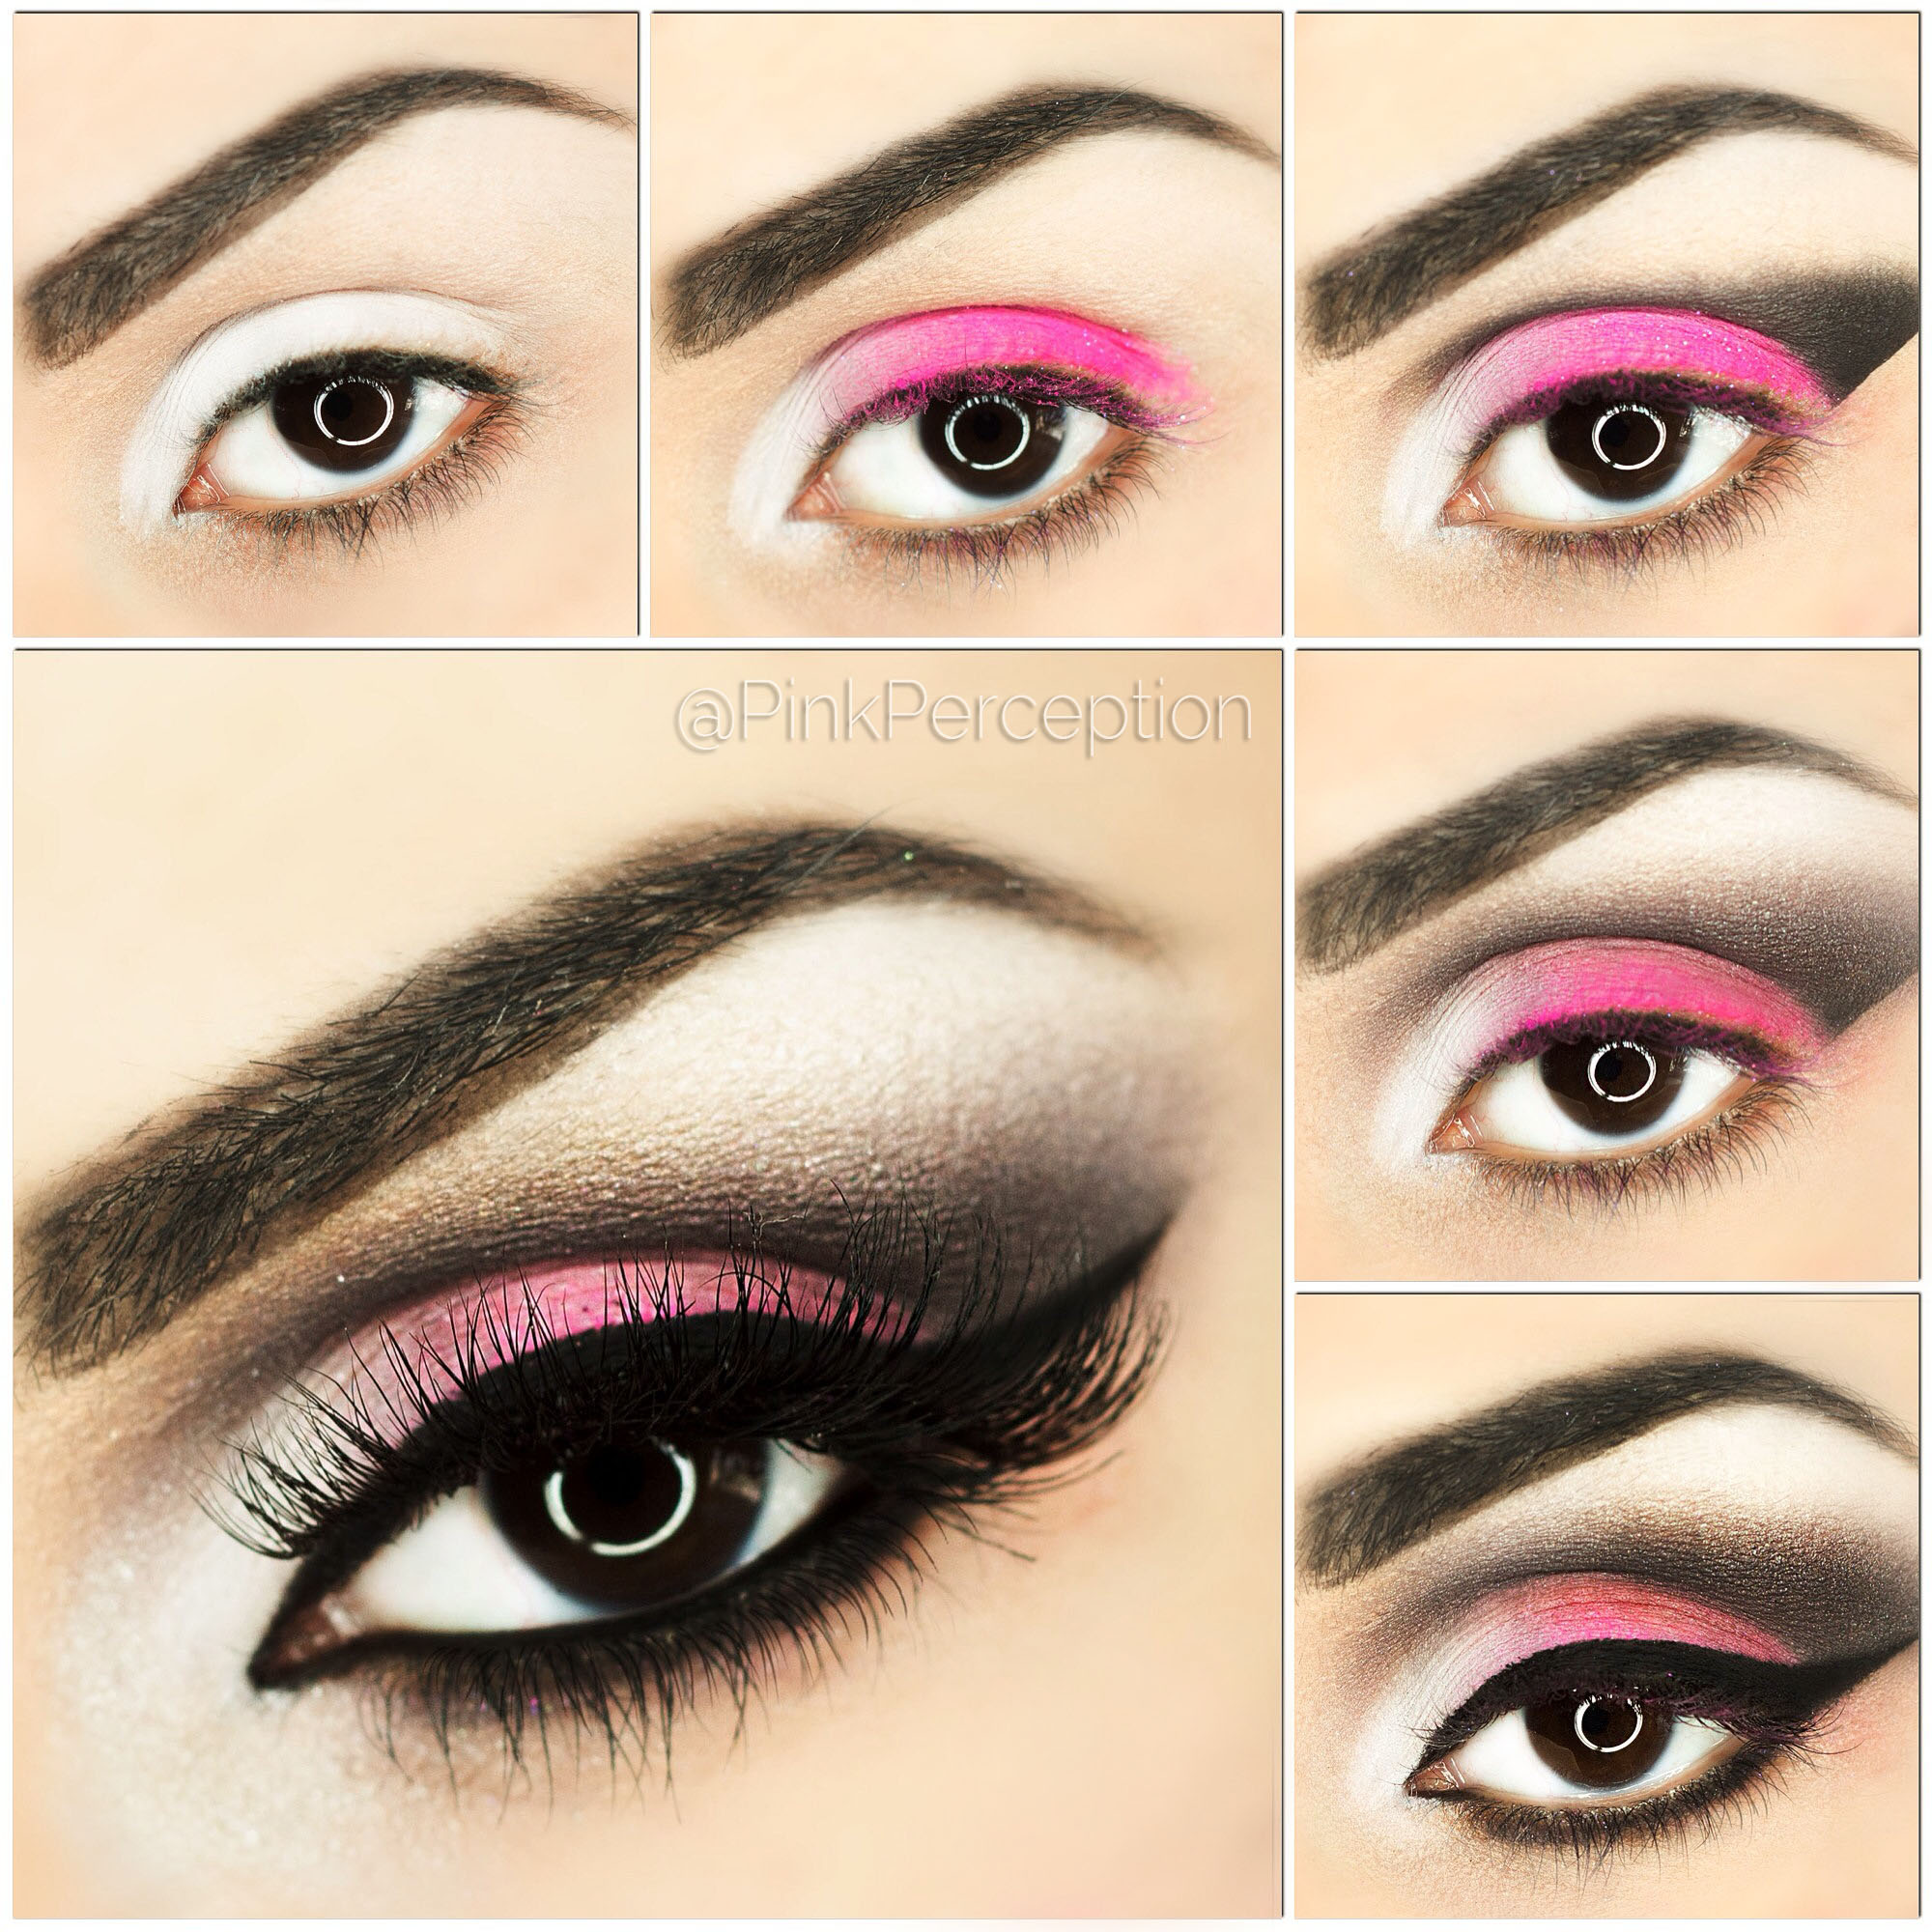 Black, white, and pink smoky eye